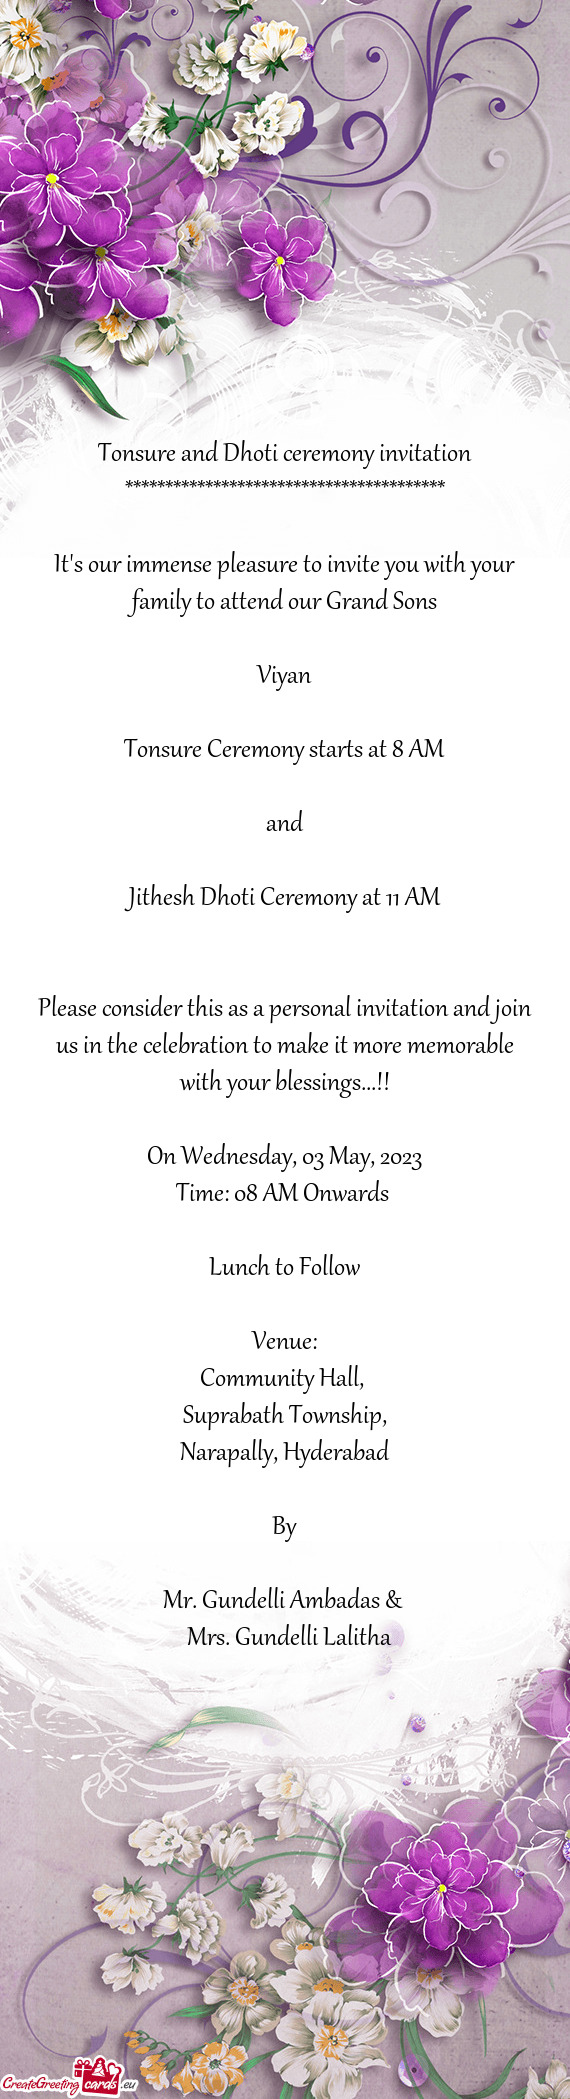 Jithesh Dhoti Ceremony at 11 AM